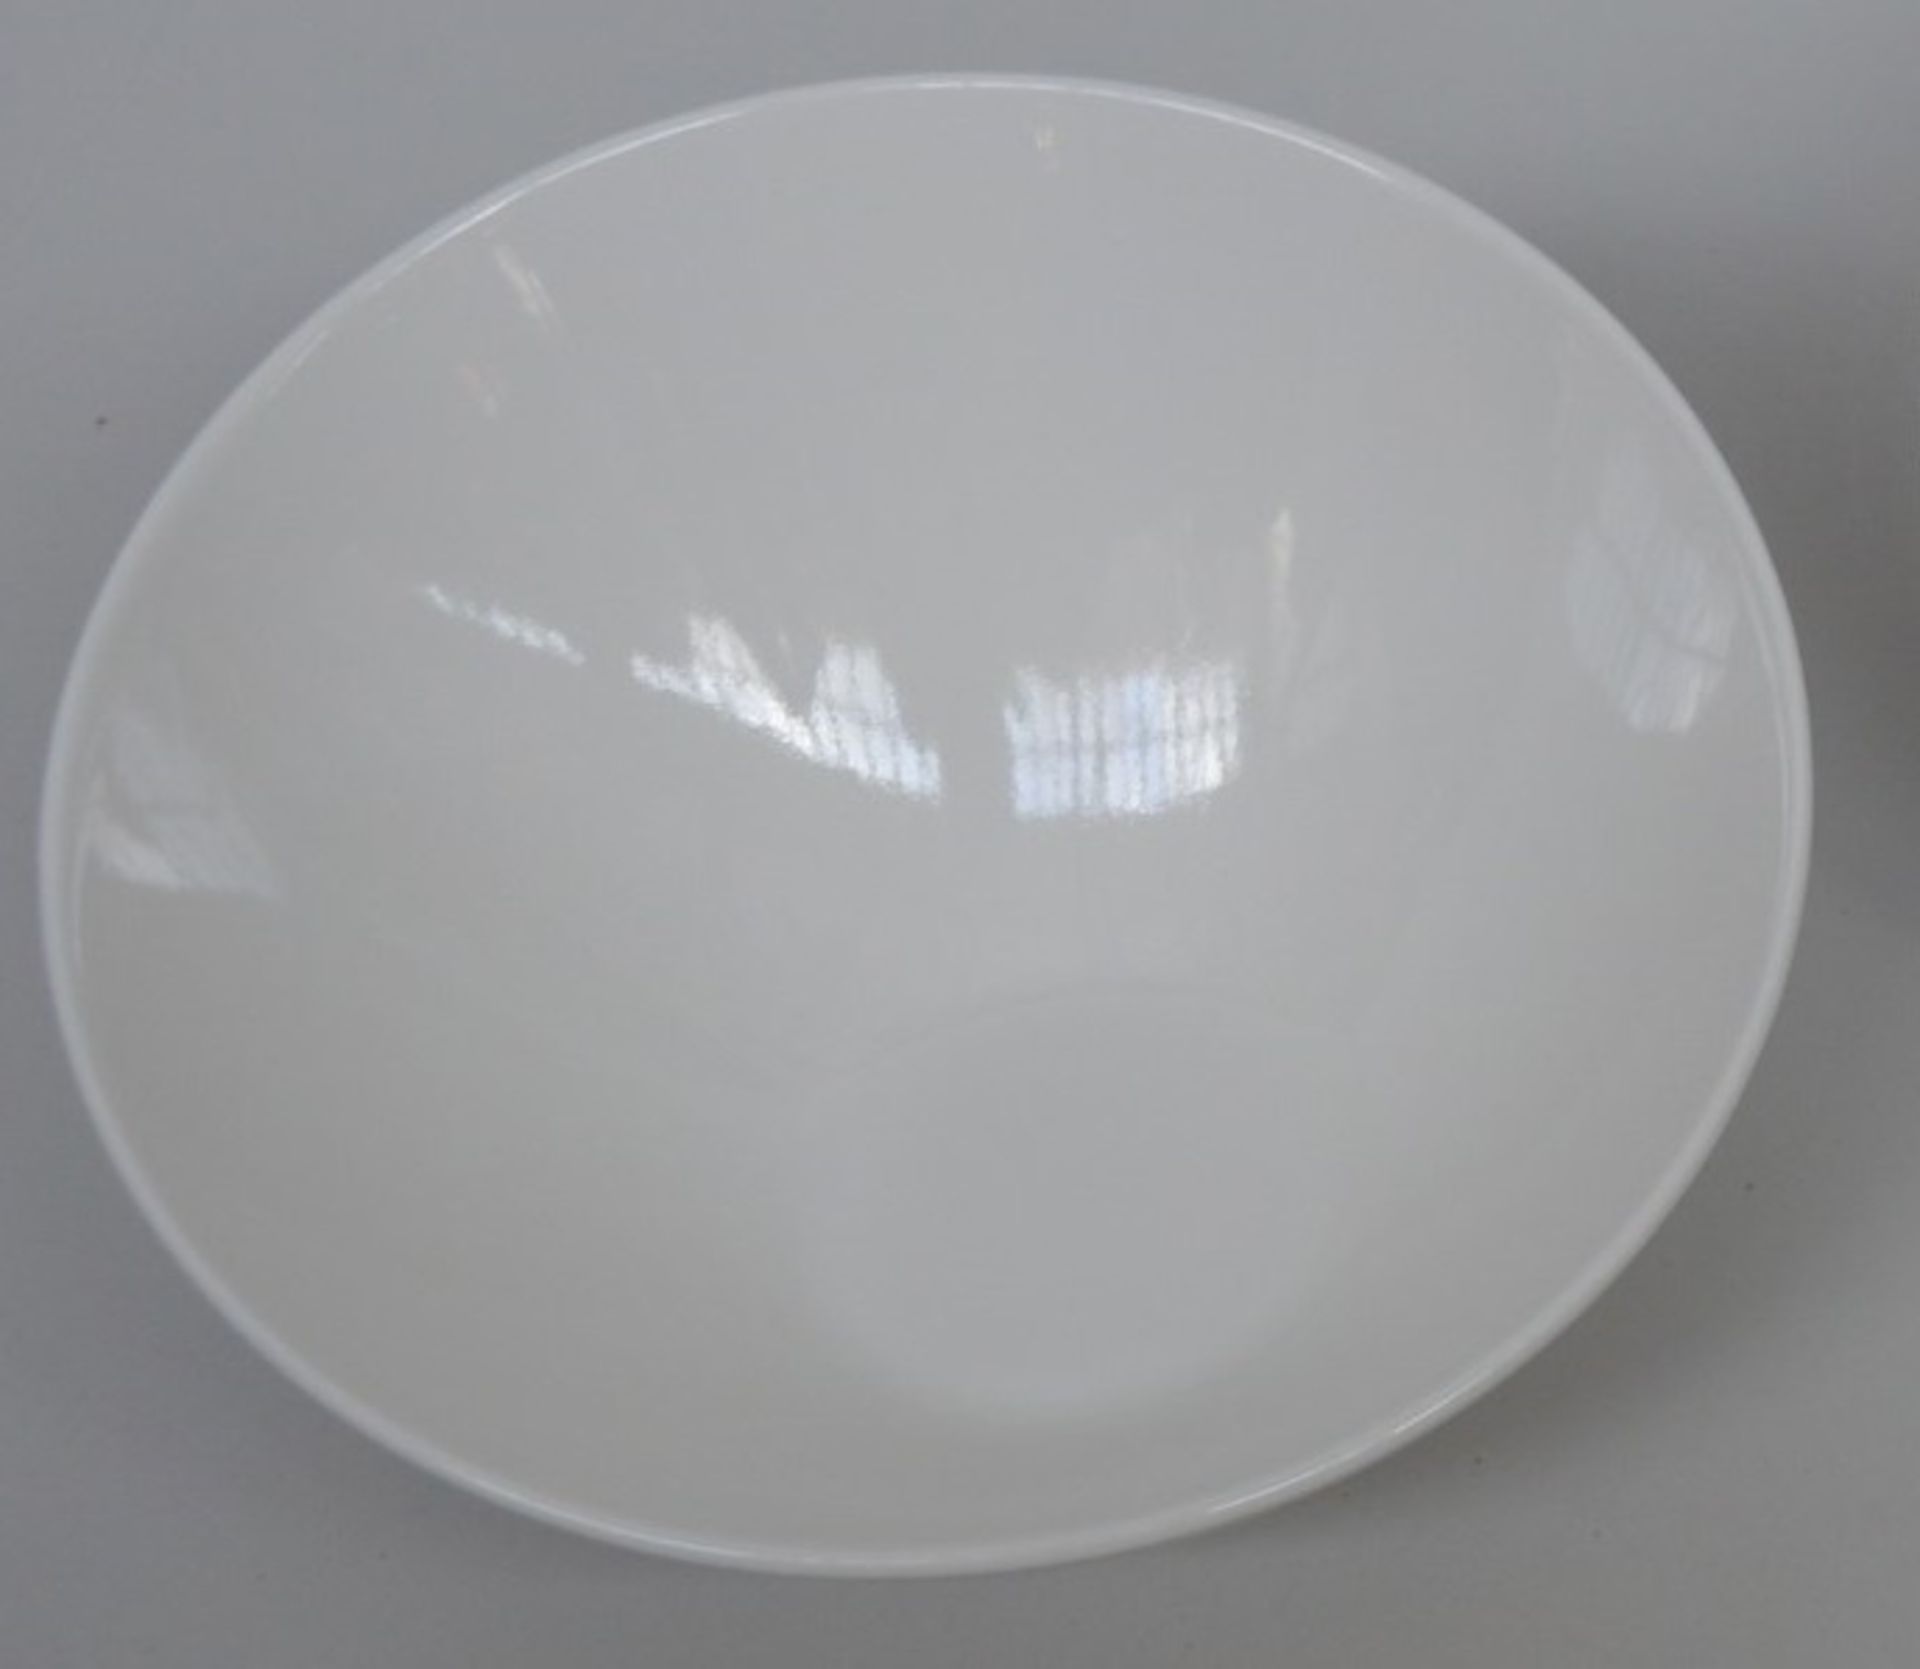 12 x Steelite Sheer Distinction Monaco White Bowls - 21.5cm - Product Code 9001C620 - New Boxed - Image 5 of 5